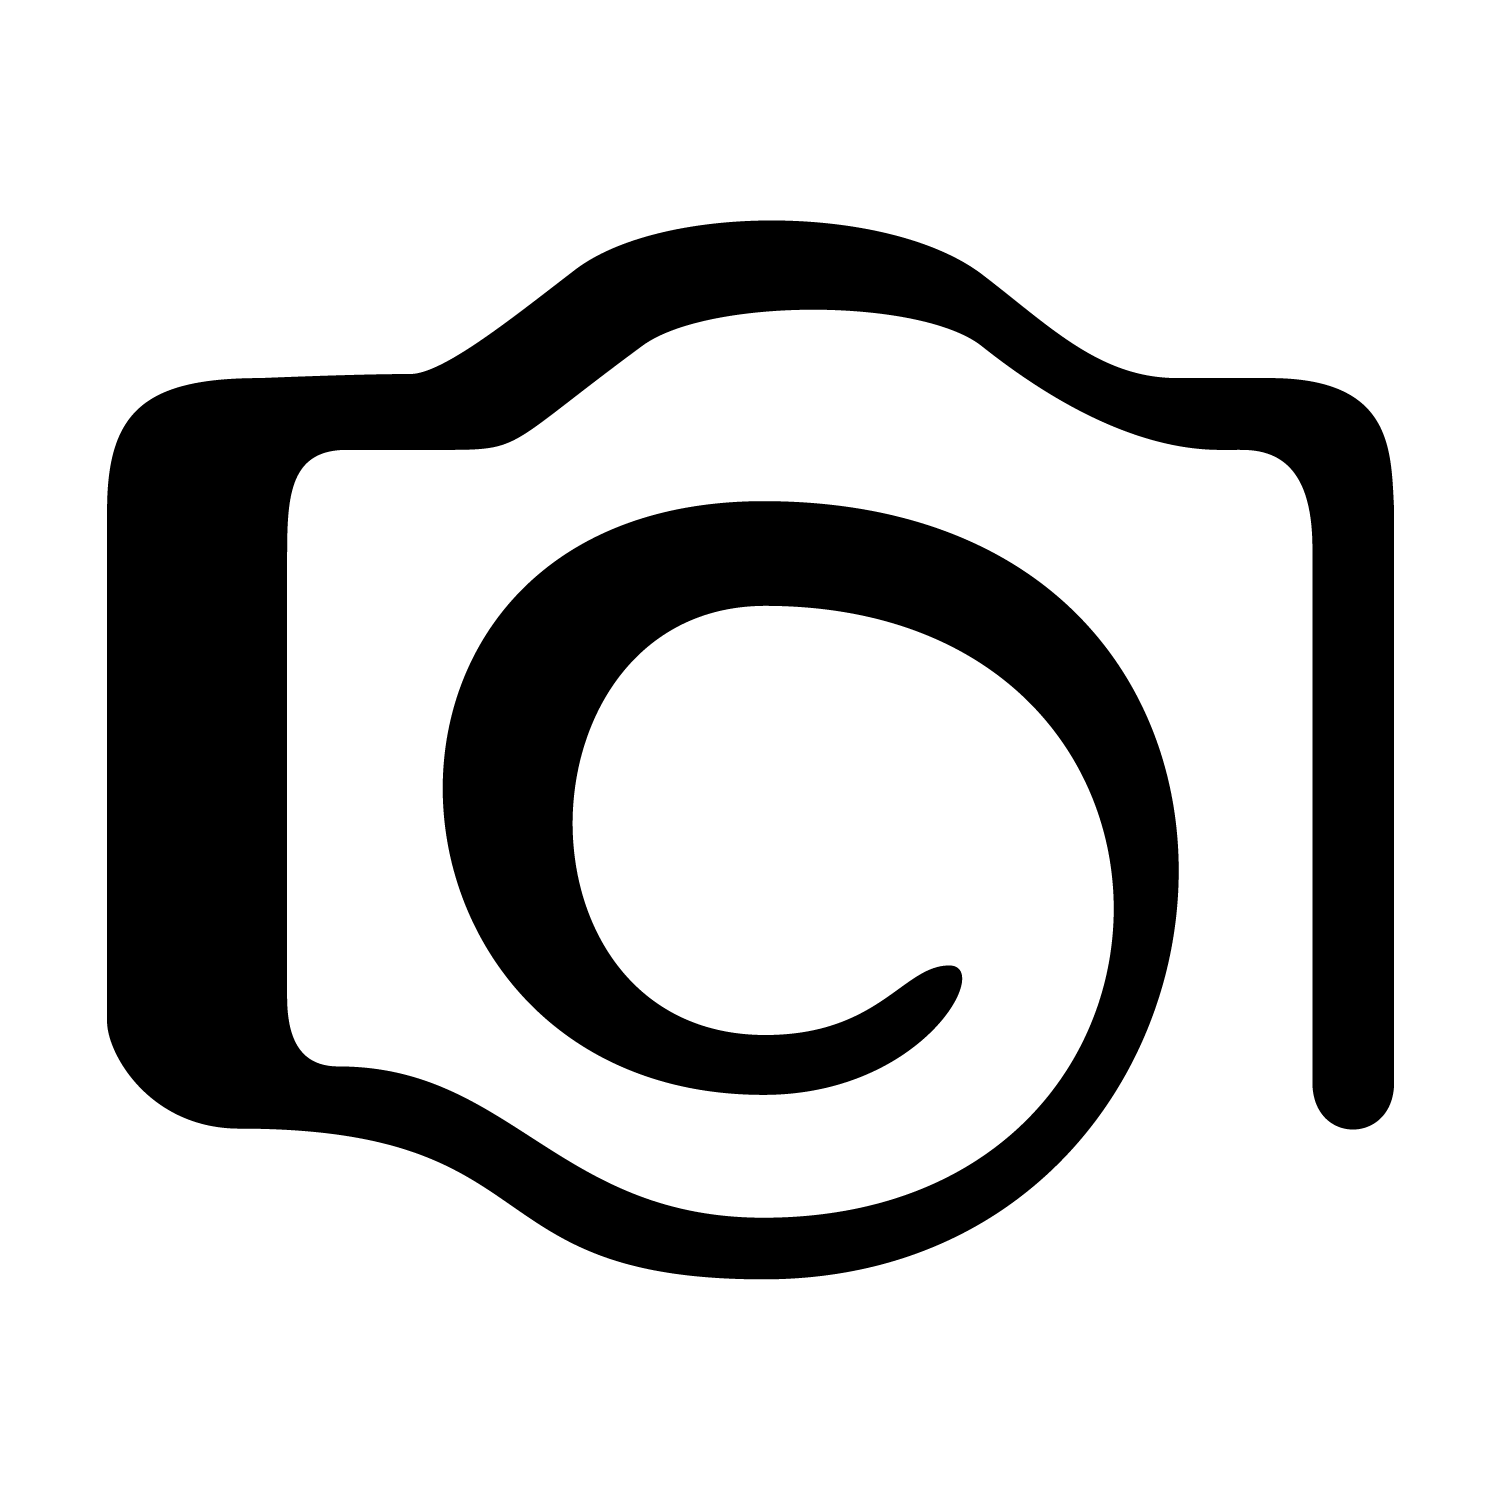 Photography Logo Png Images Logo Ideas Free Download Free Transparent Png Logos